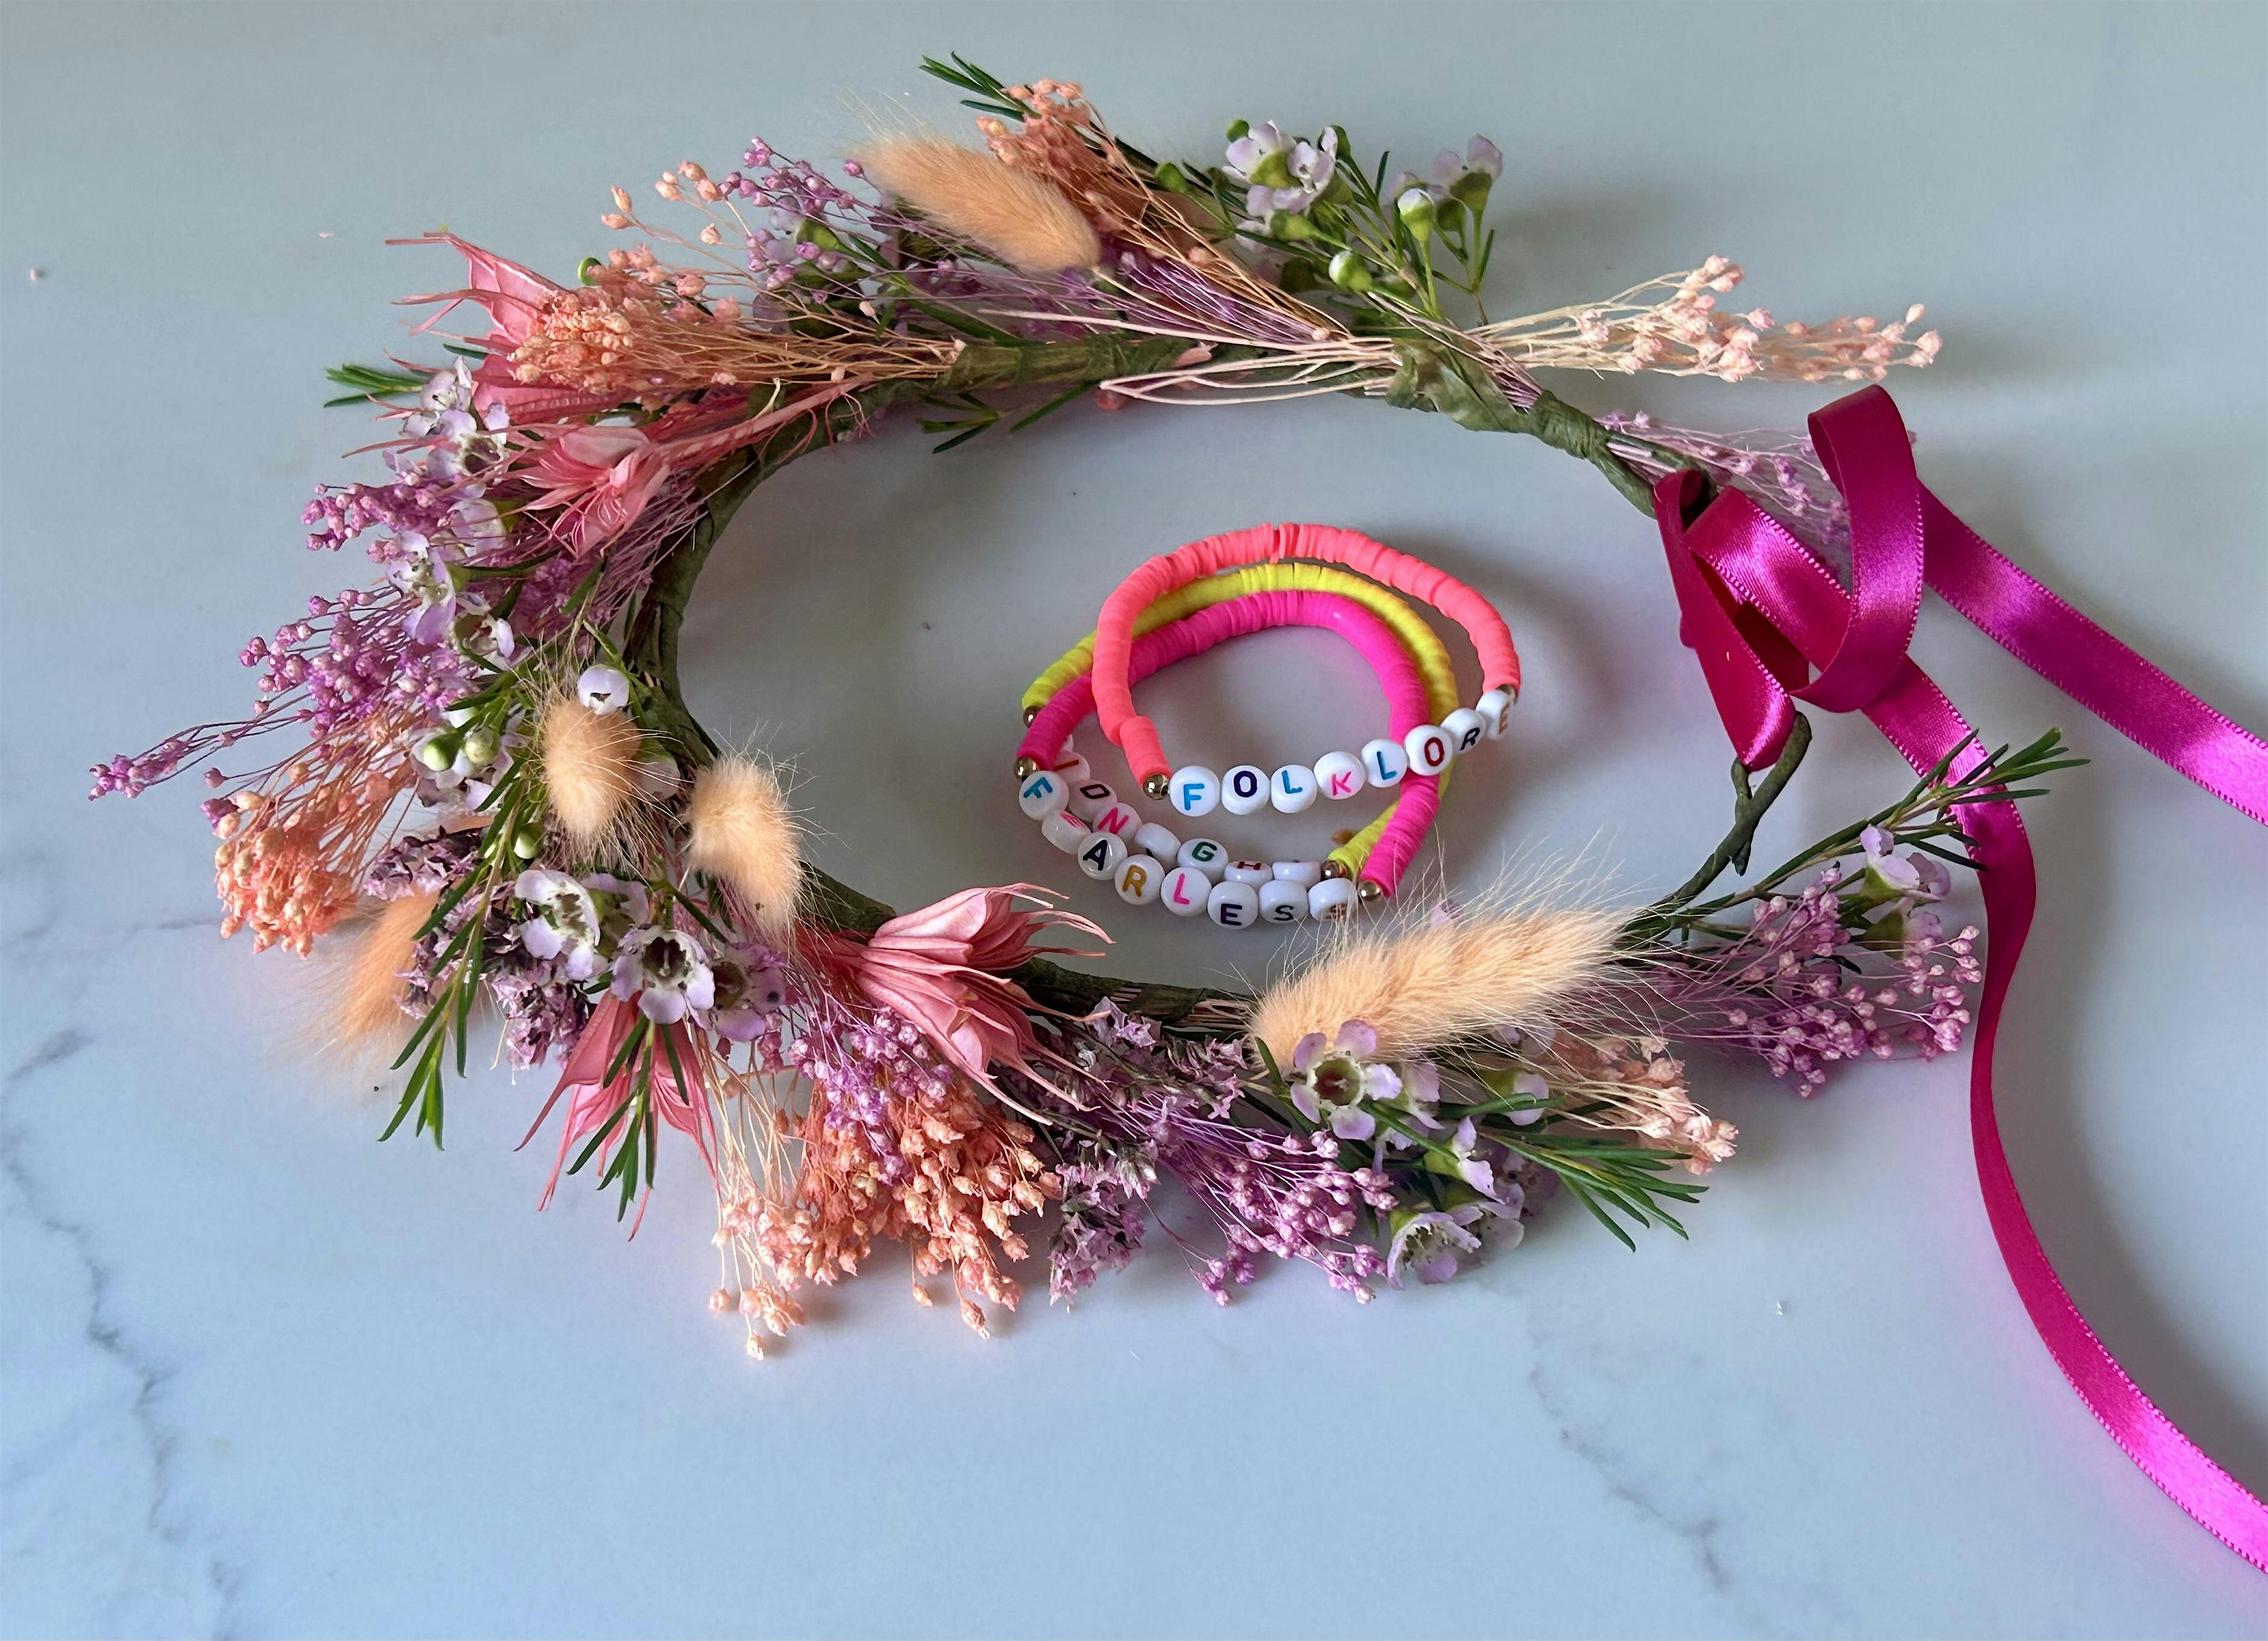 Flower Crowns & Friendship Bracelets with Bloomologie